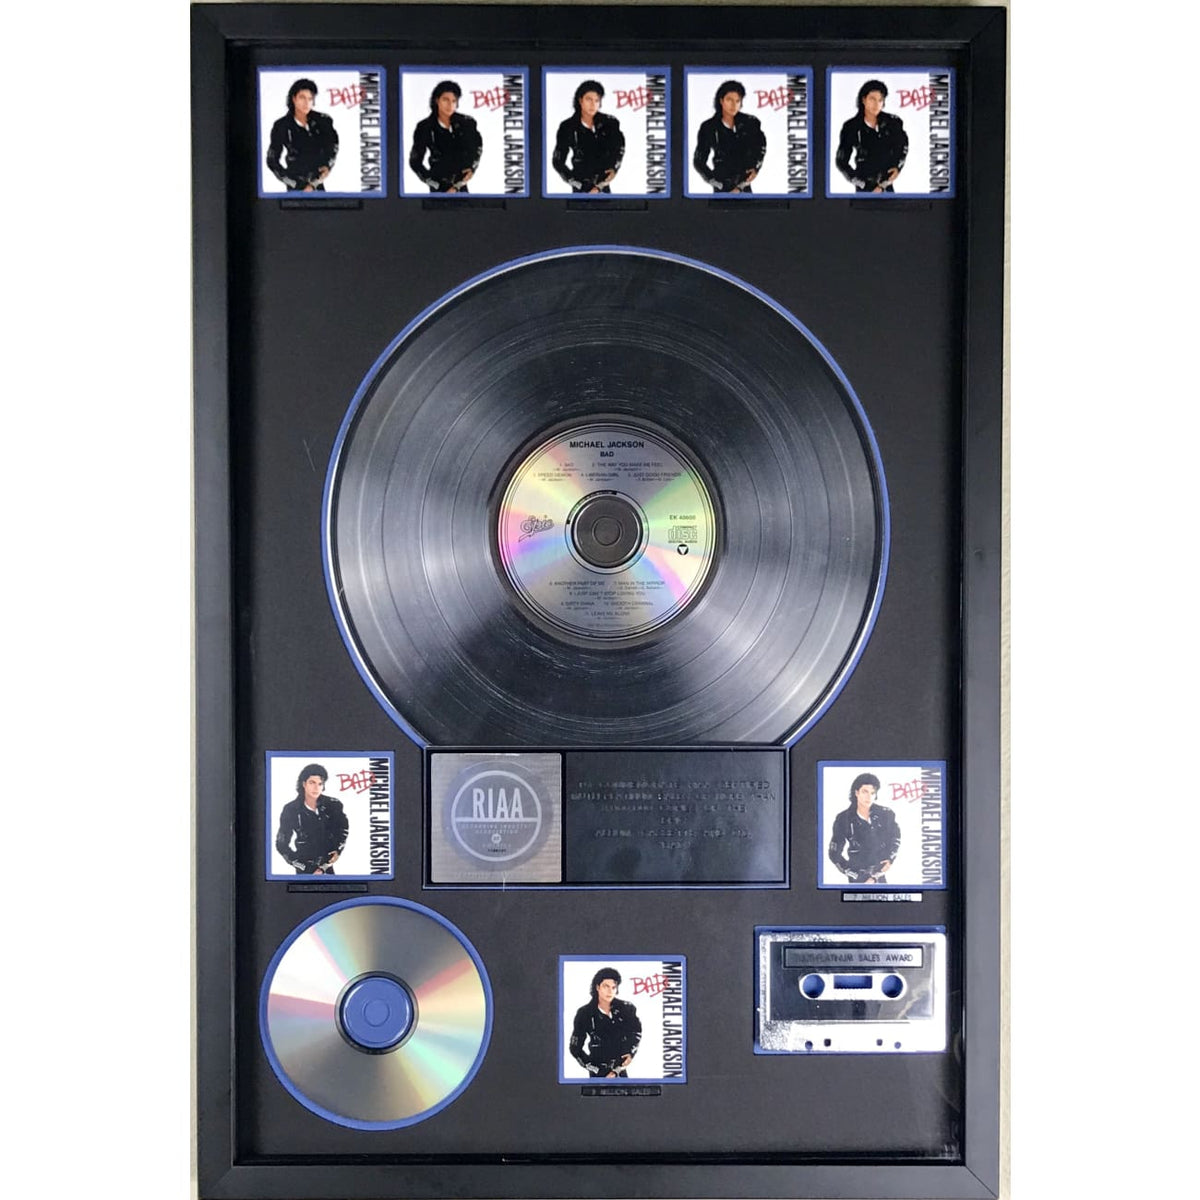 Gold Record & CD Presentation, Bad by Michael Jackson